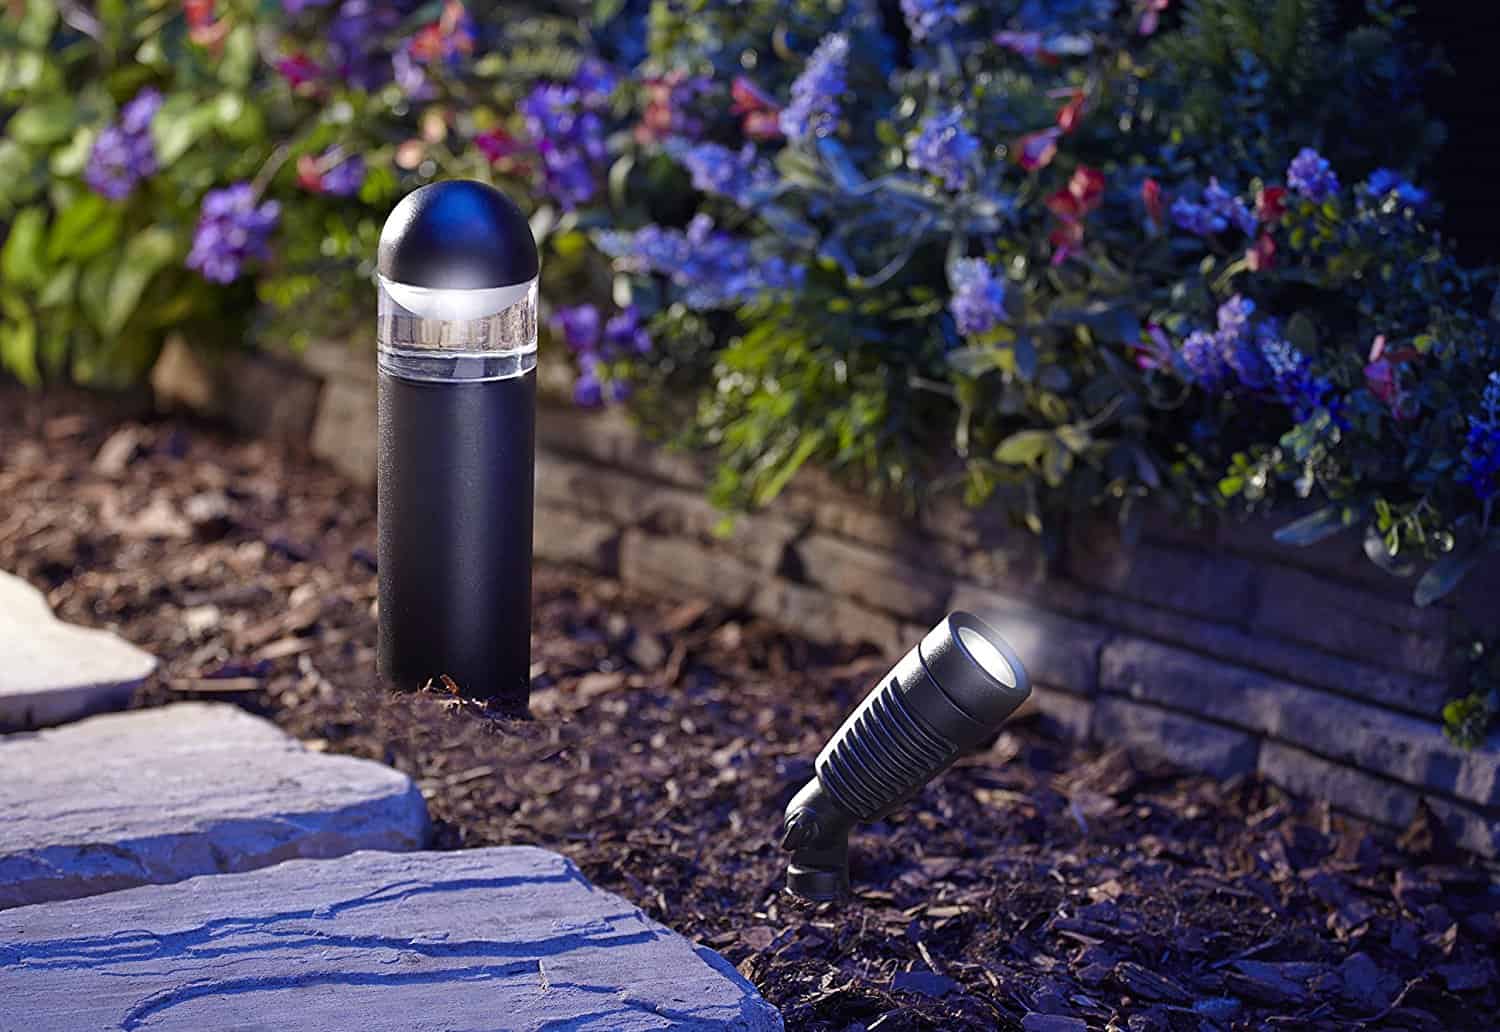 GOODSMANN Low Voltage Path Light LED Landscape Lighting for Outdoor Garden Decor 